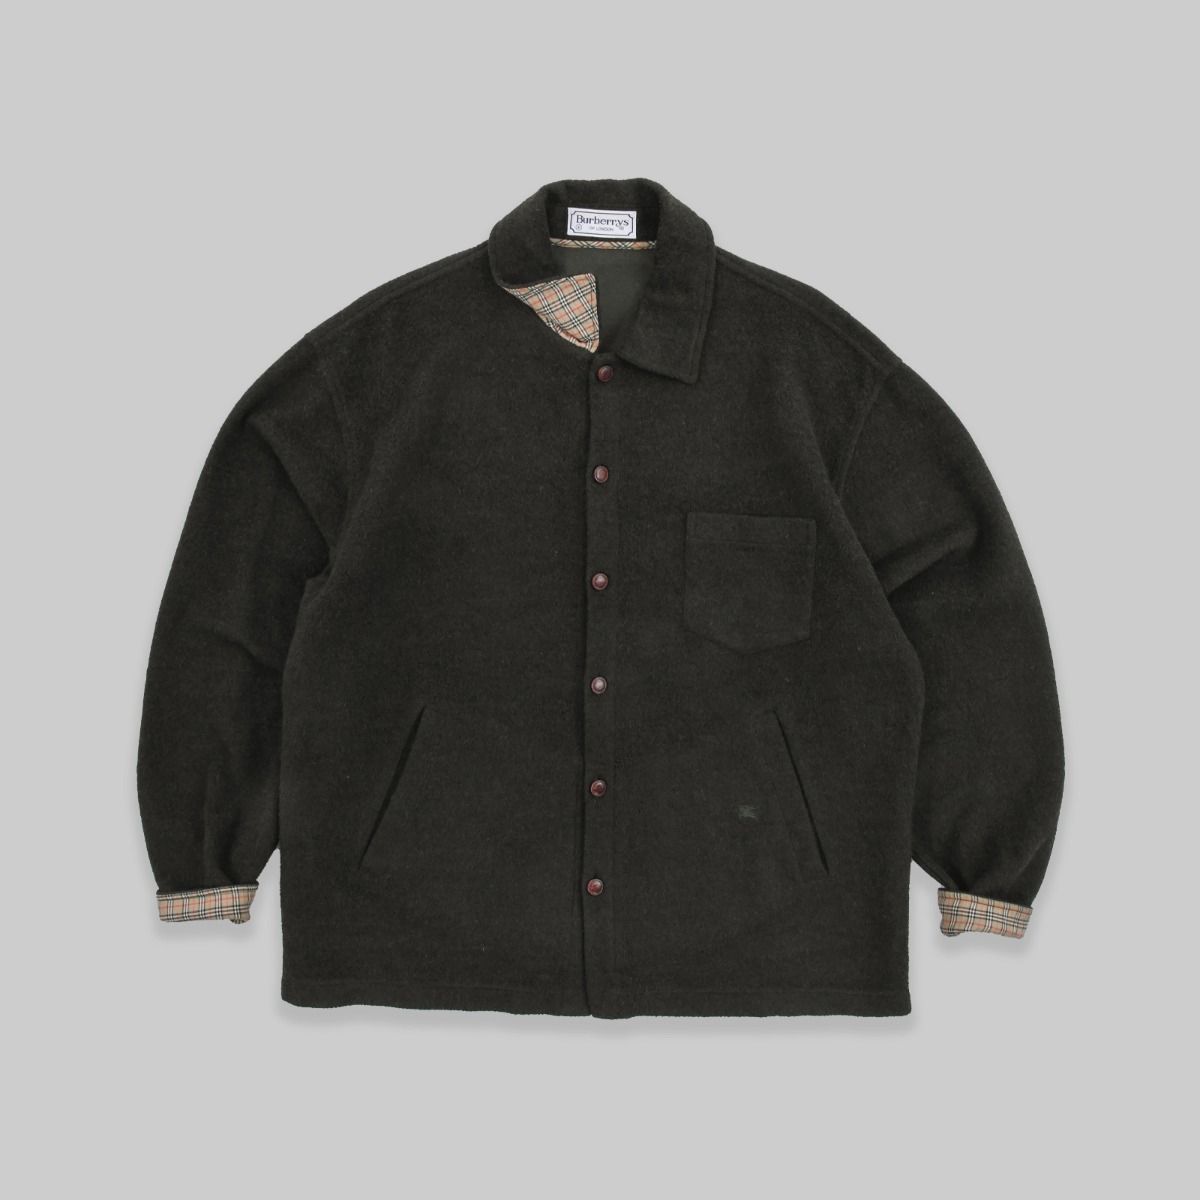 Burberry 1980s Wool Over Shirt